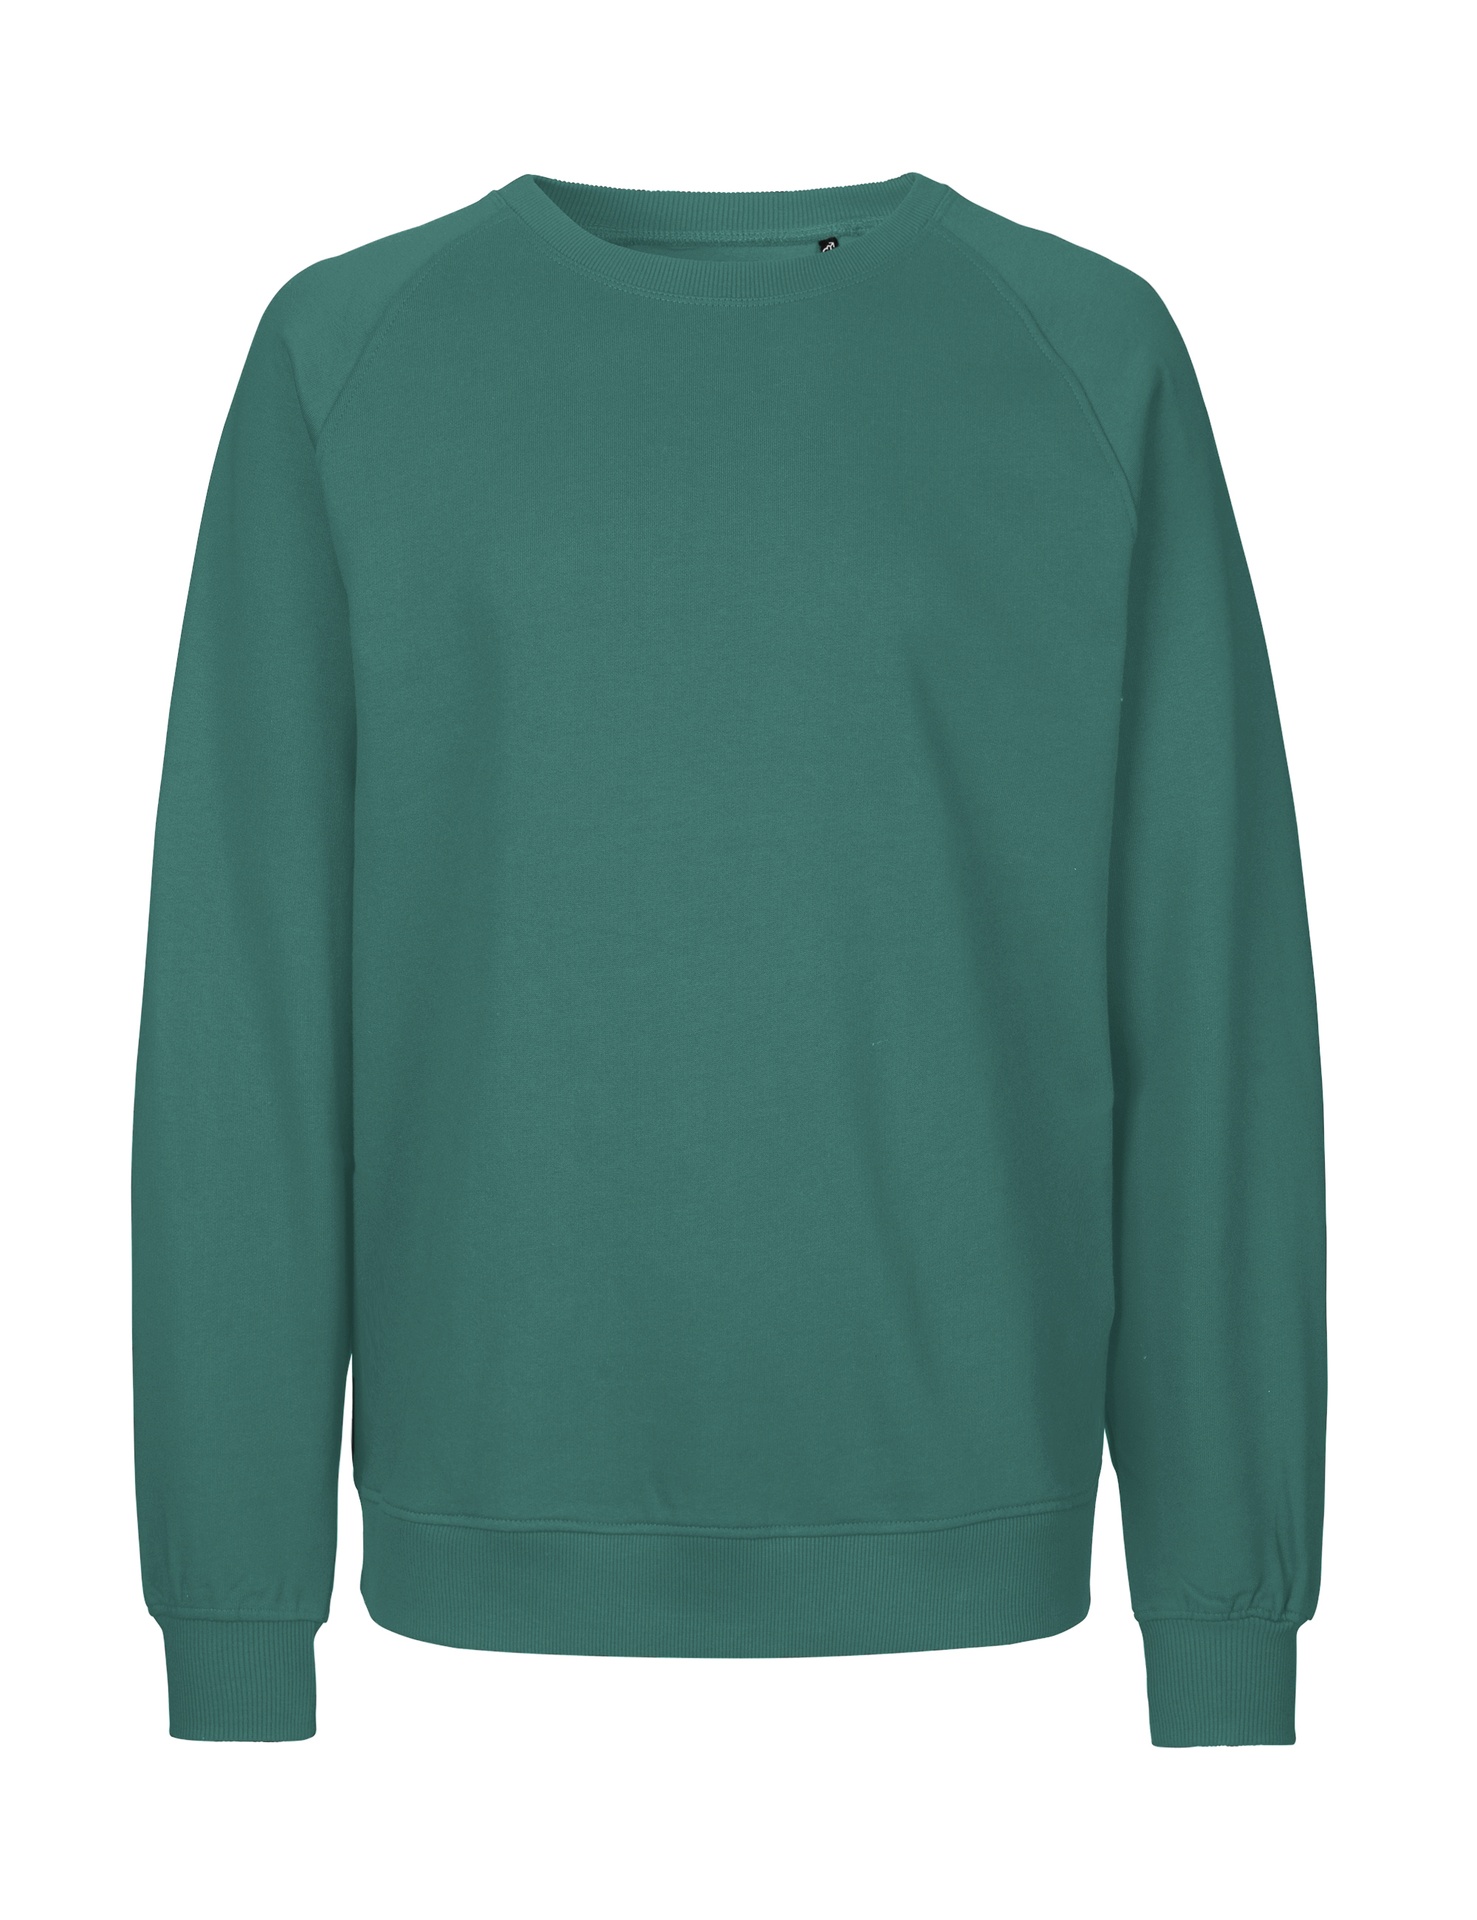 [PR/02873] Unisex Sweatshirt (Teal 52, 2XL)